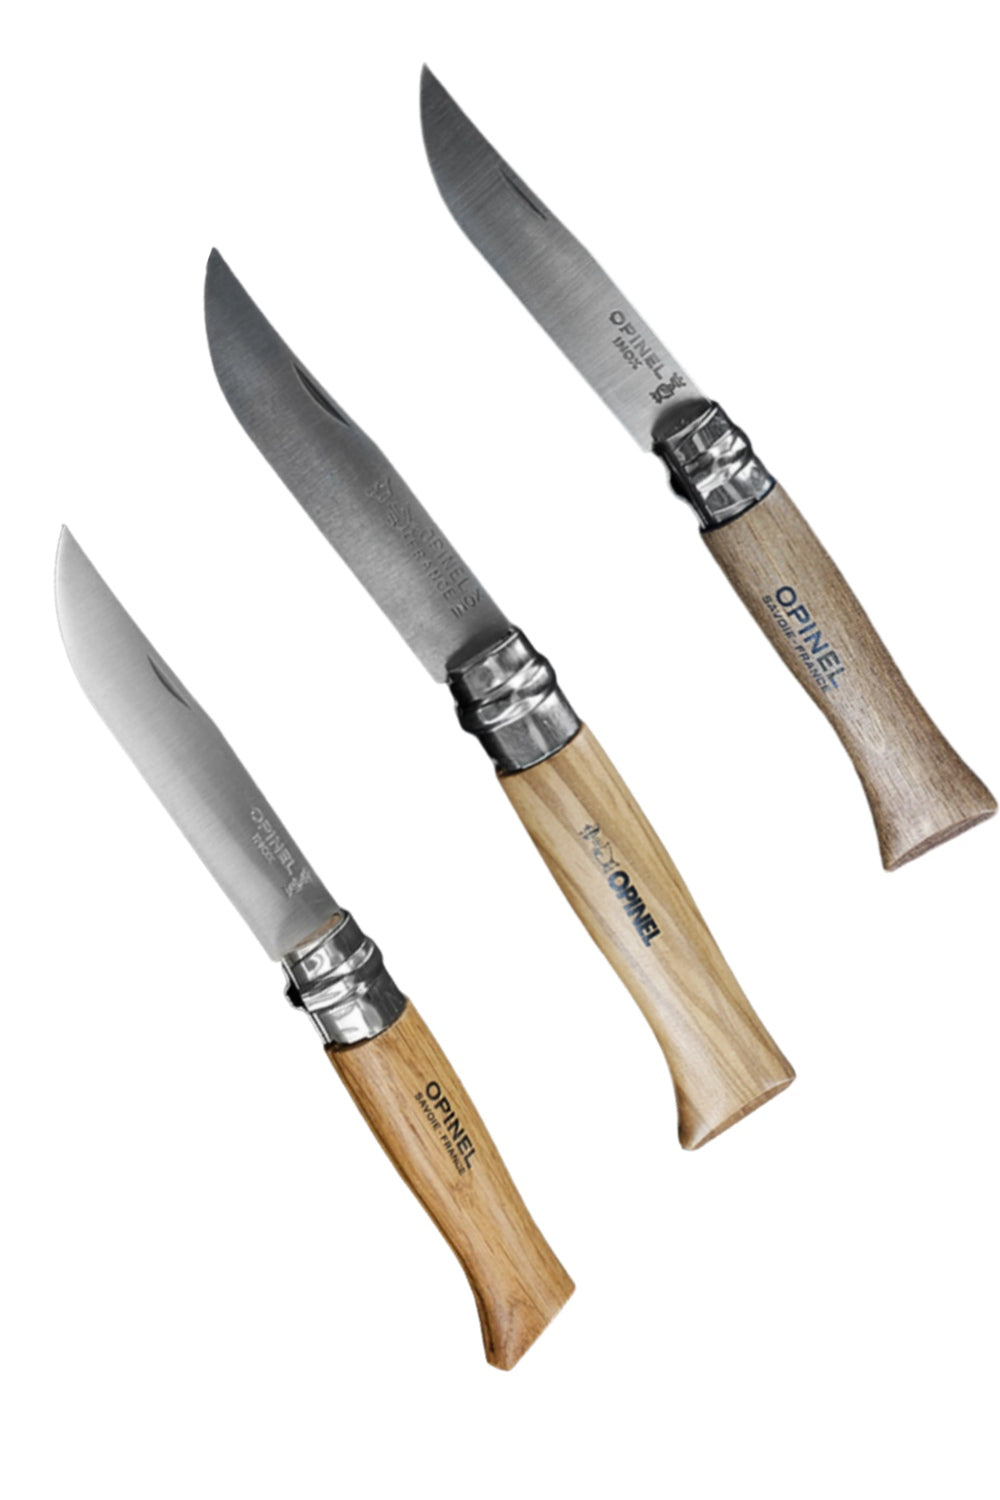 Opinel - Les Effilés walnut - n15 stainless steel - knife